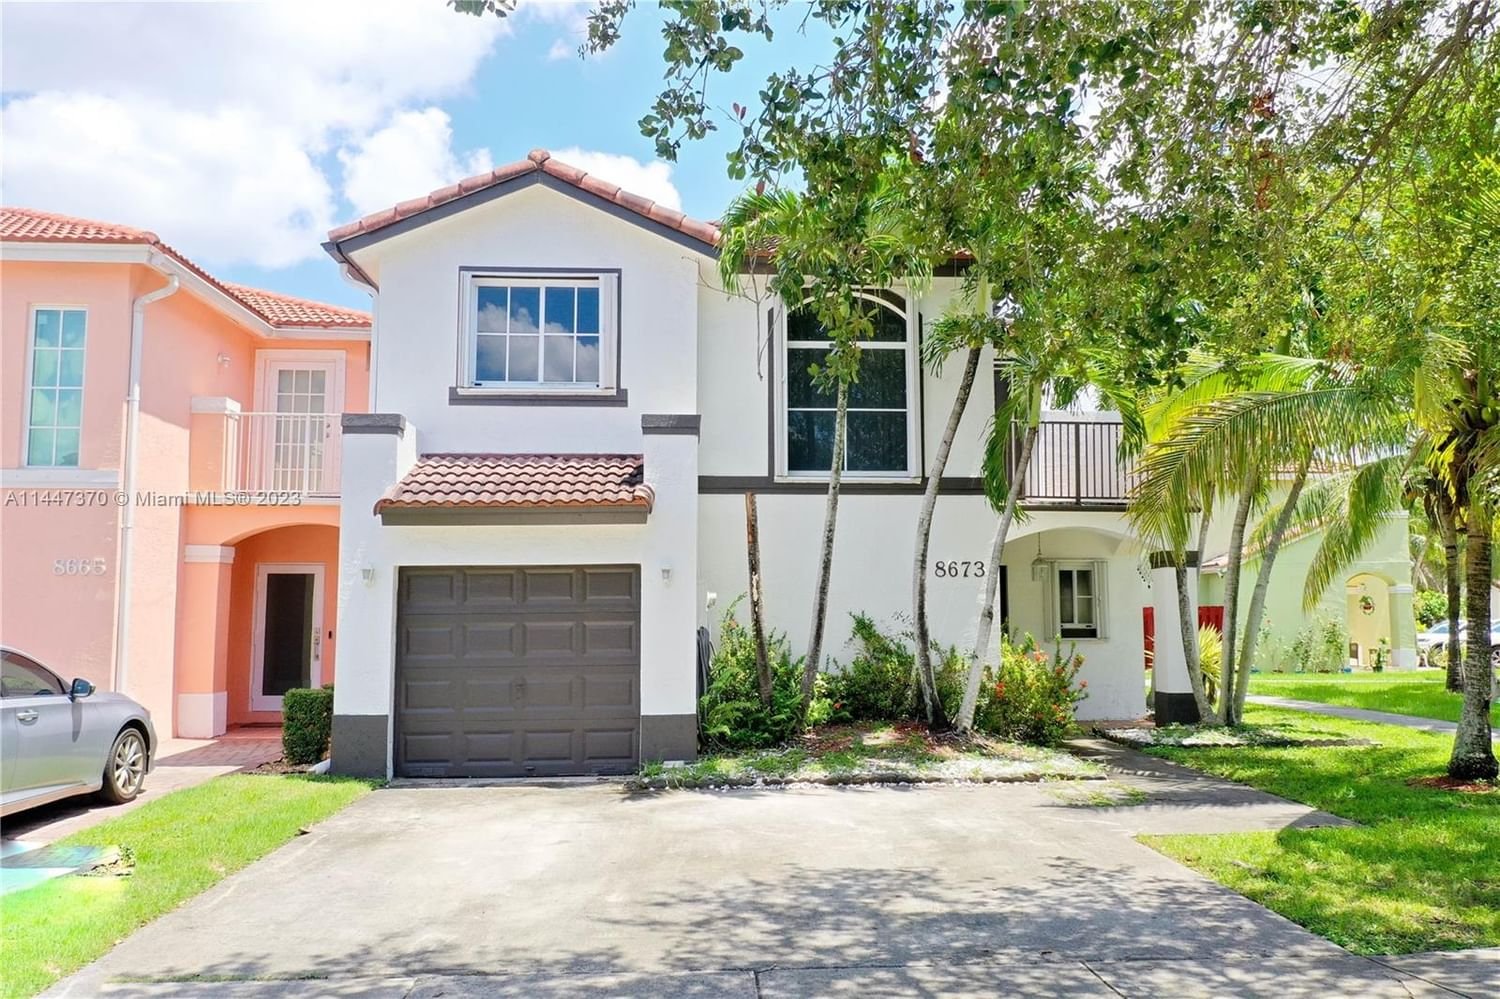 Real estate property located at 8673 159th Ct, Miami-Dade County, Miami, FL